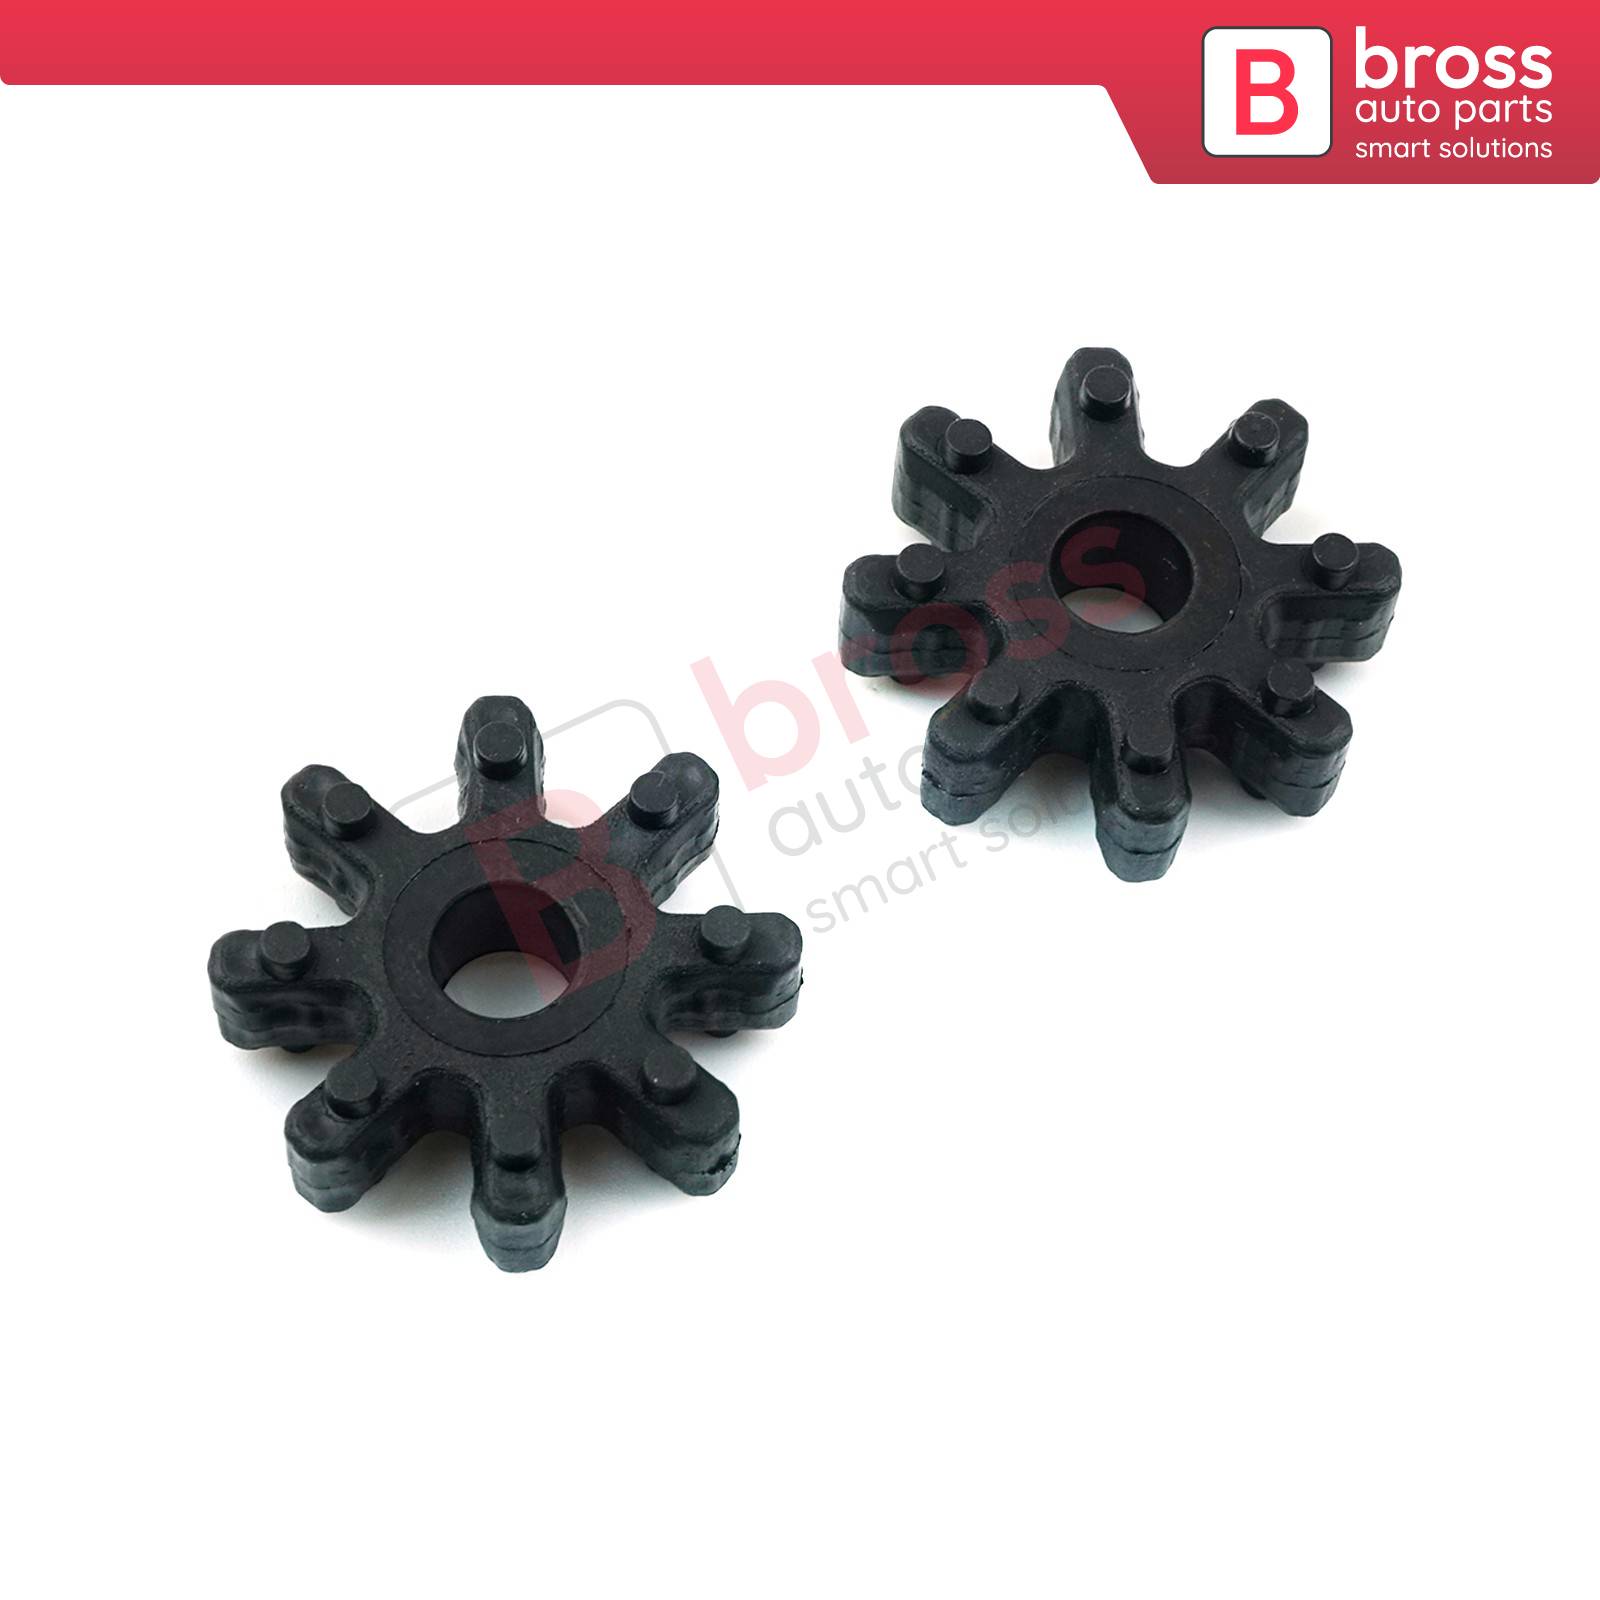 Bross Auto Parts - BSP882 2 Pcs Steering Column Flexible Coupler